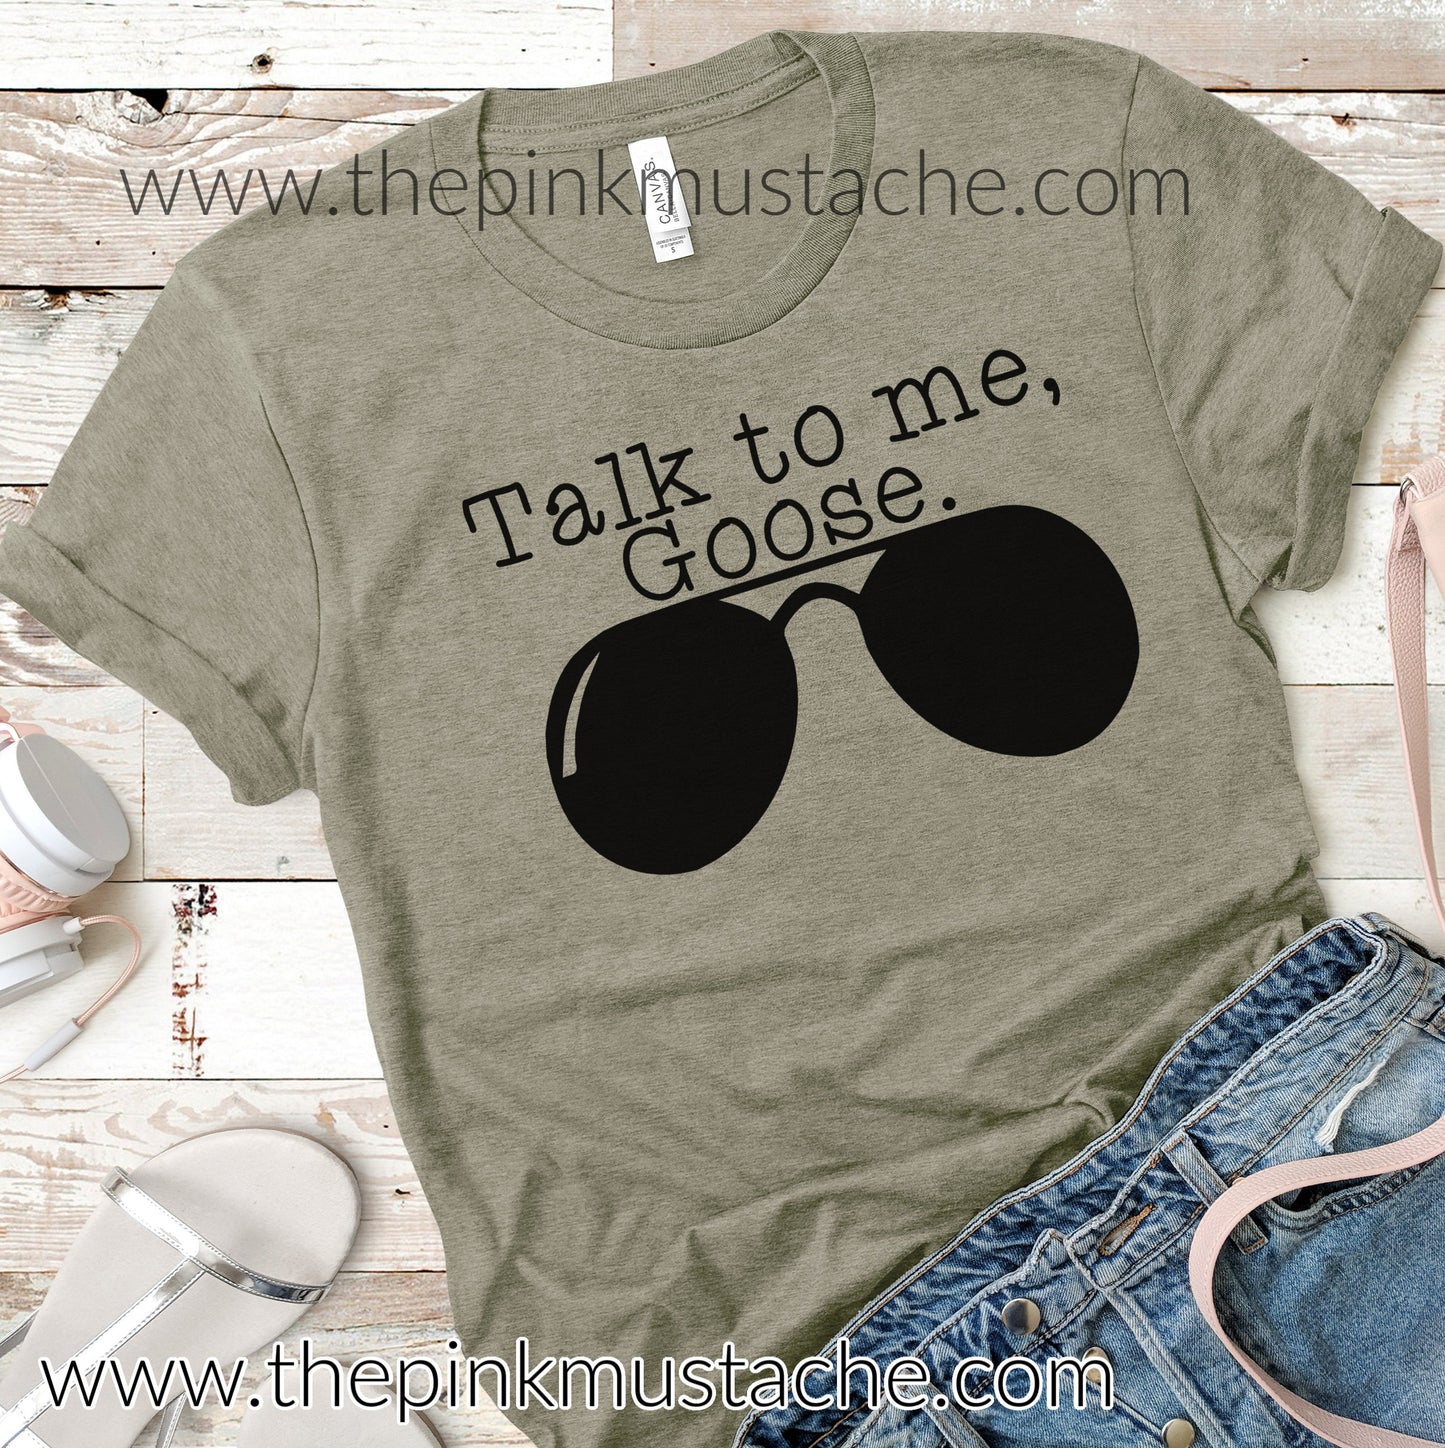 Talk To Me Goose T-Shirt  / Top Gun Inspired Tee / Maverick Goose / Aviators Tee - Top Gun 2 Inspired